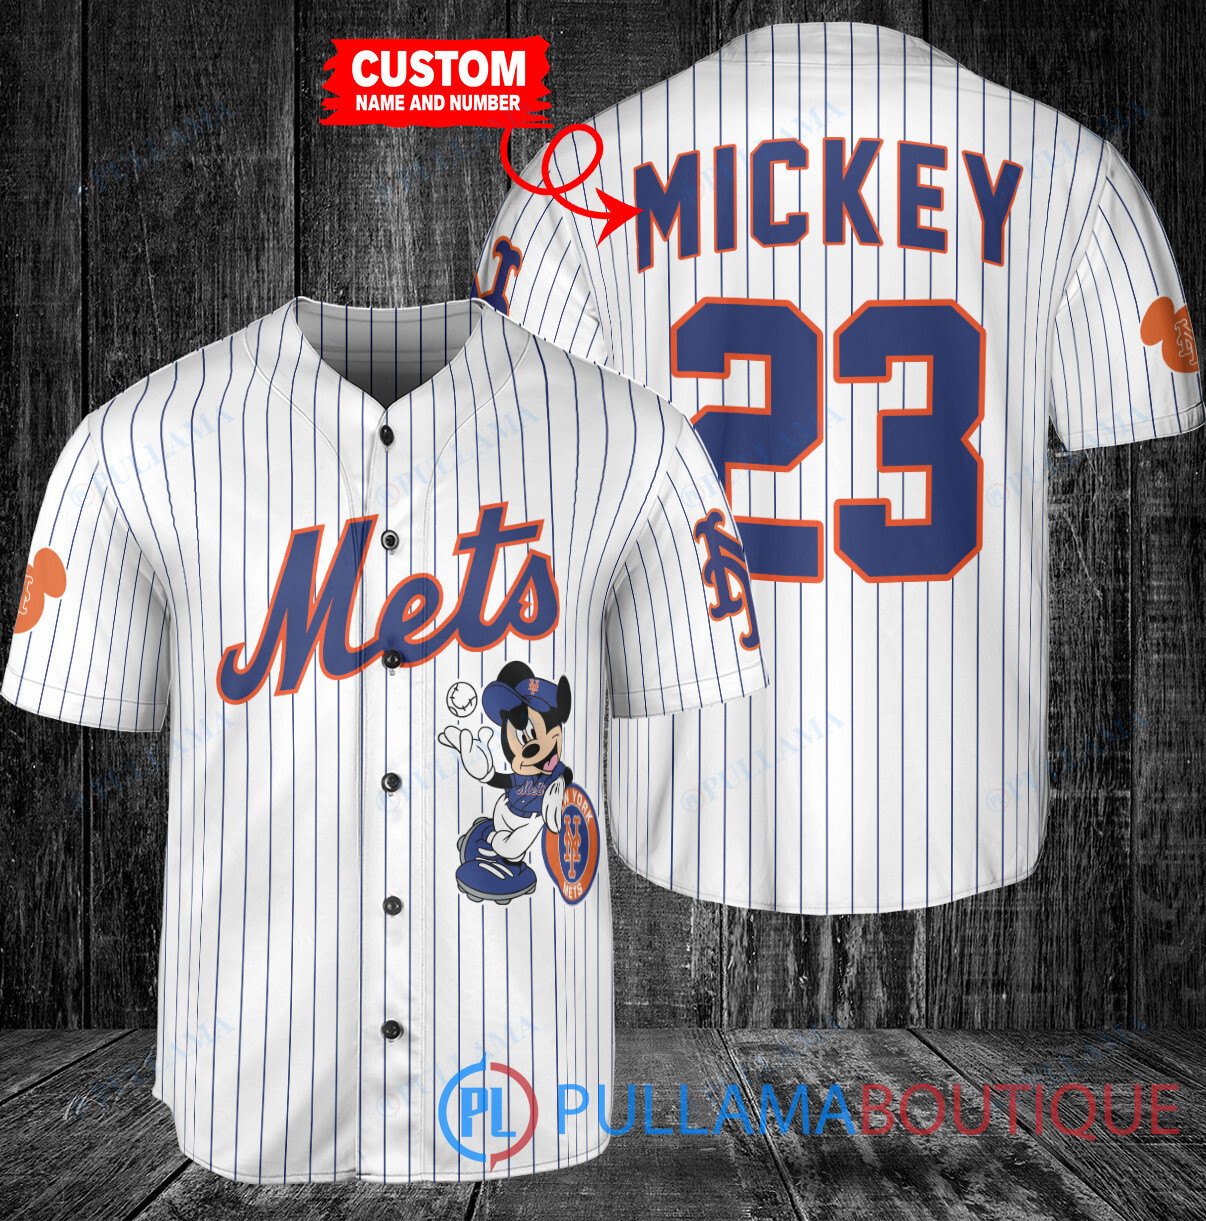 Atlanta Braves Stitch custom Personalized Baseball Jersey